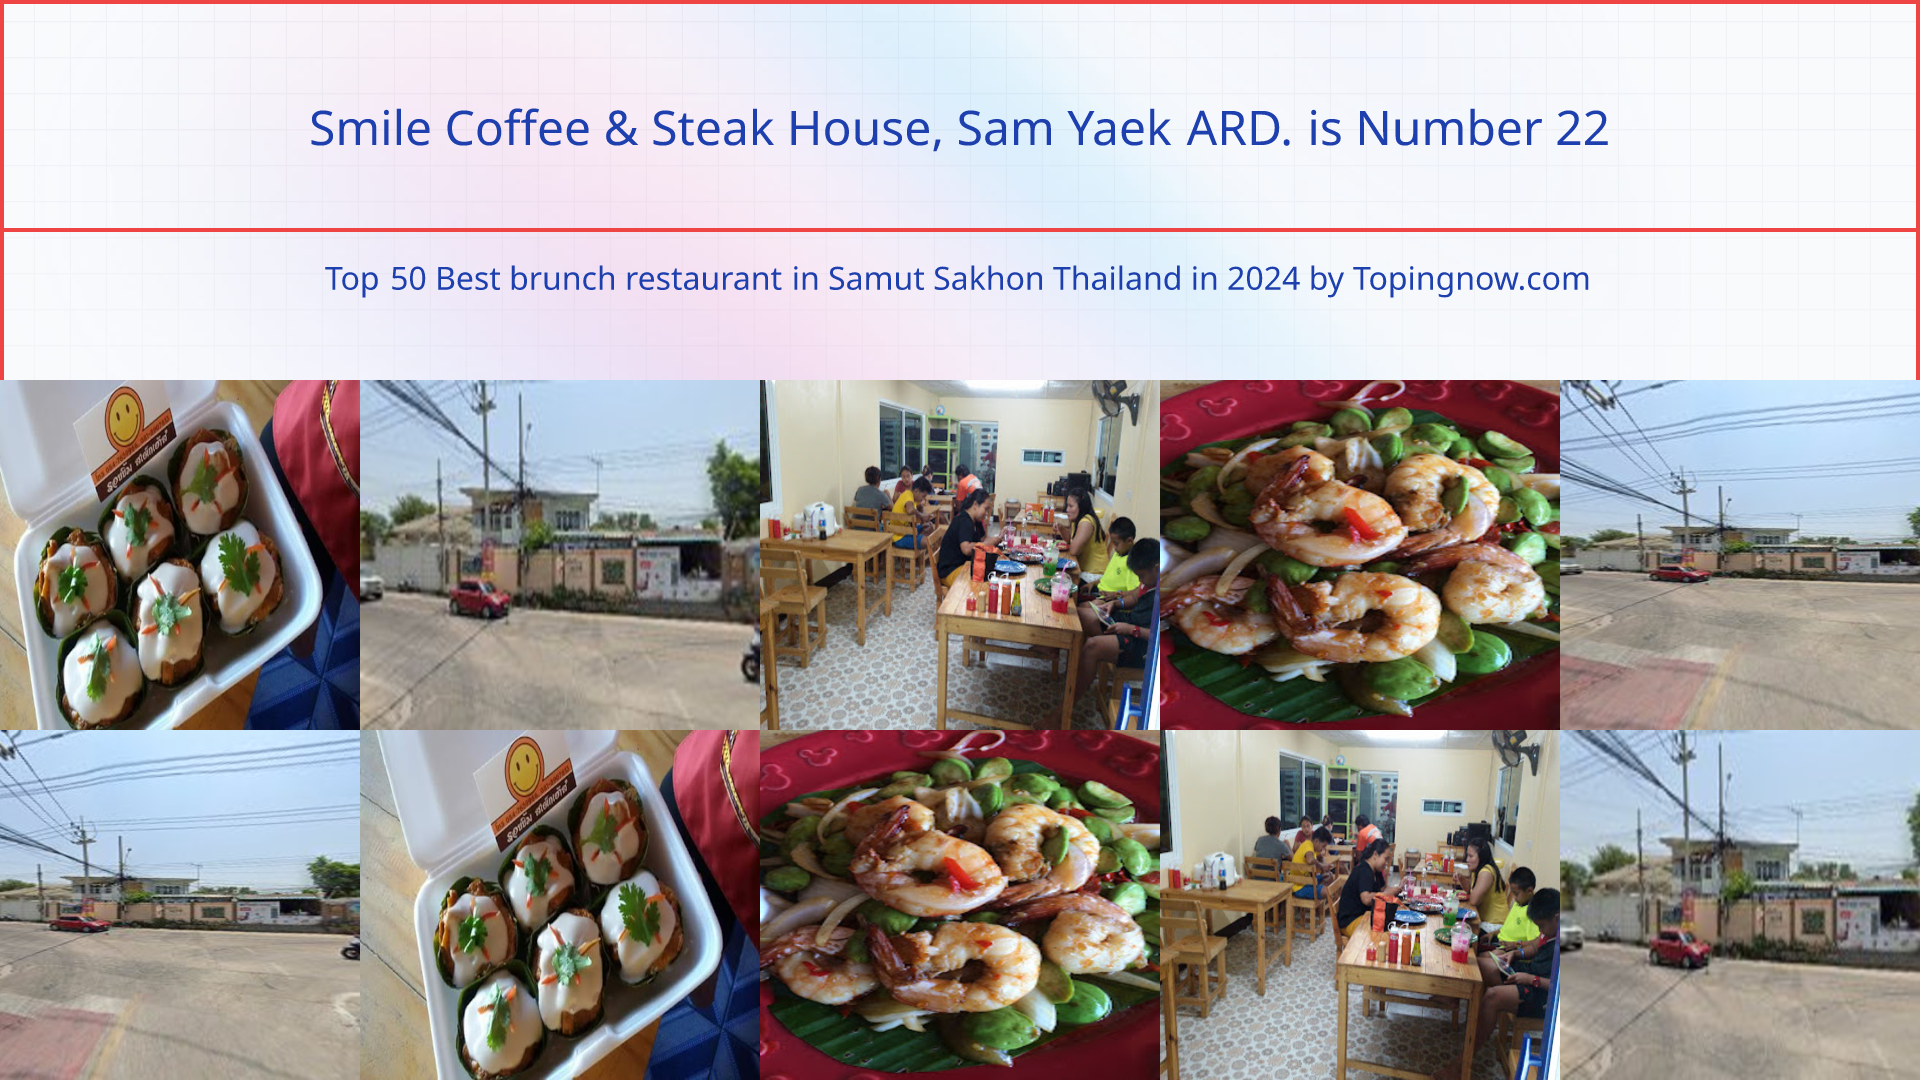 Smile Coffee & Steak House, Sam Yaek ARD.: Top 50 Best brunch restaurant in Samut Sakhon Thailand in 2024